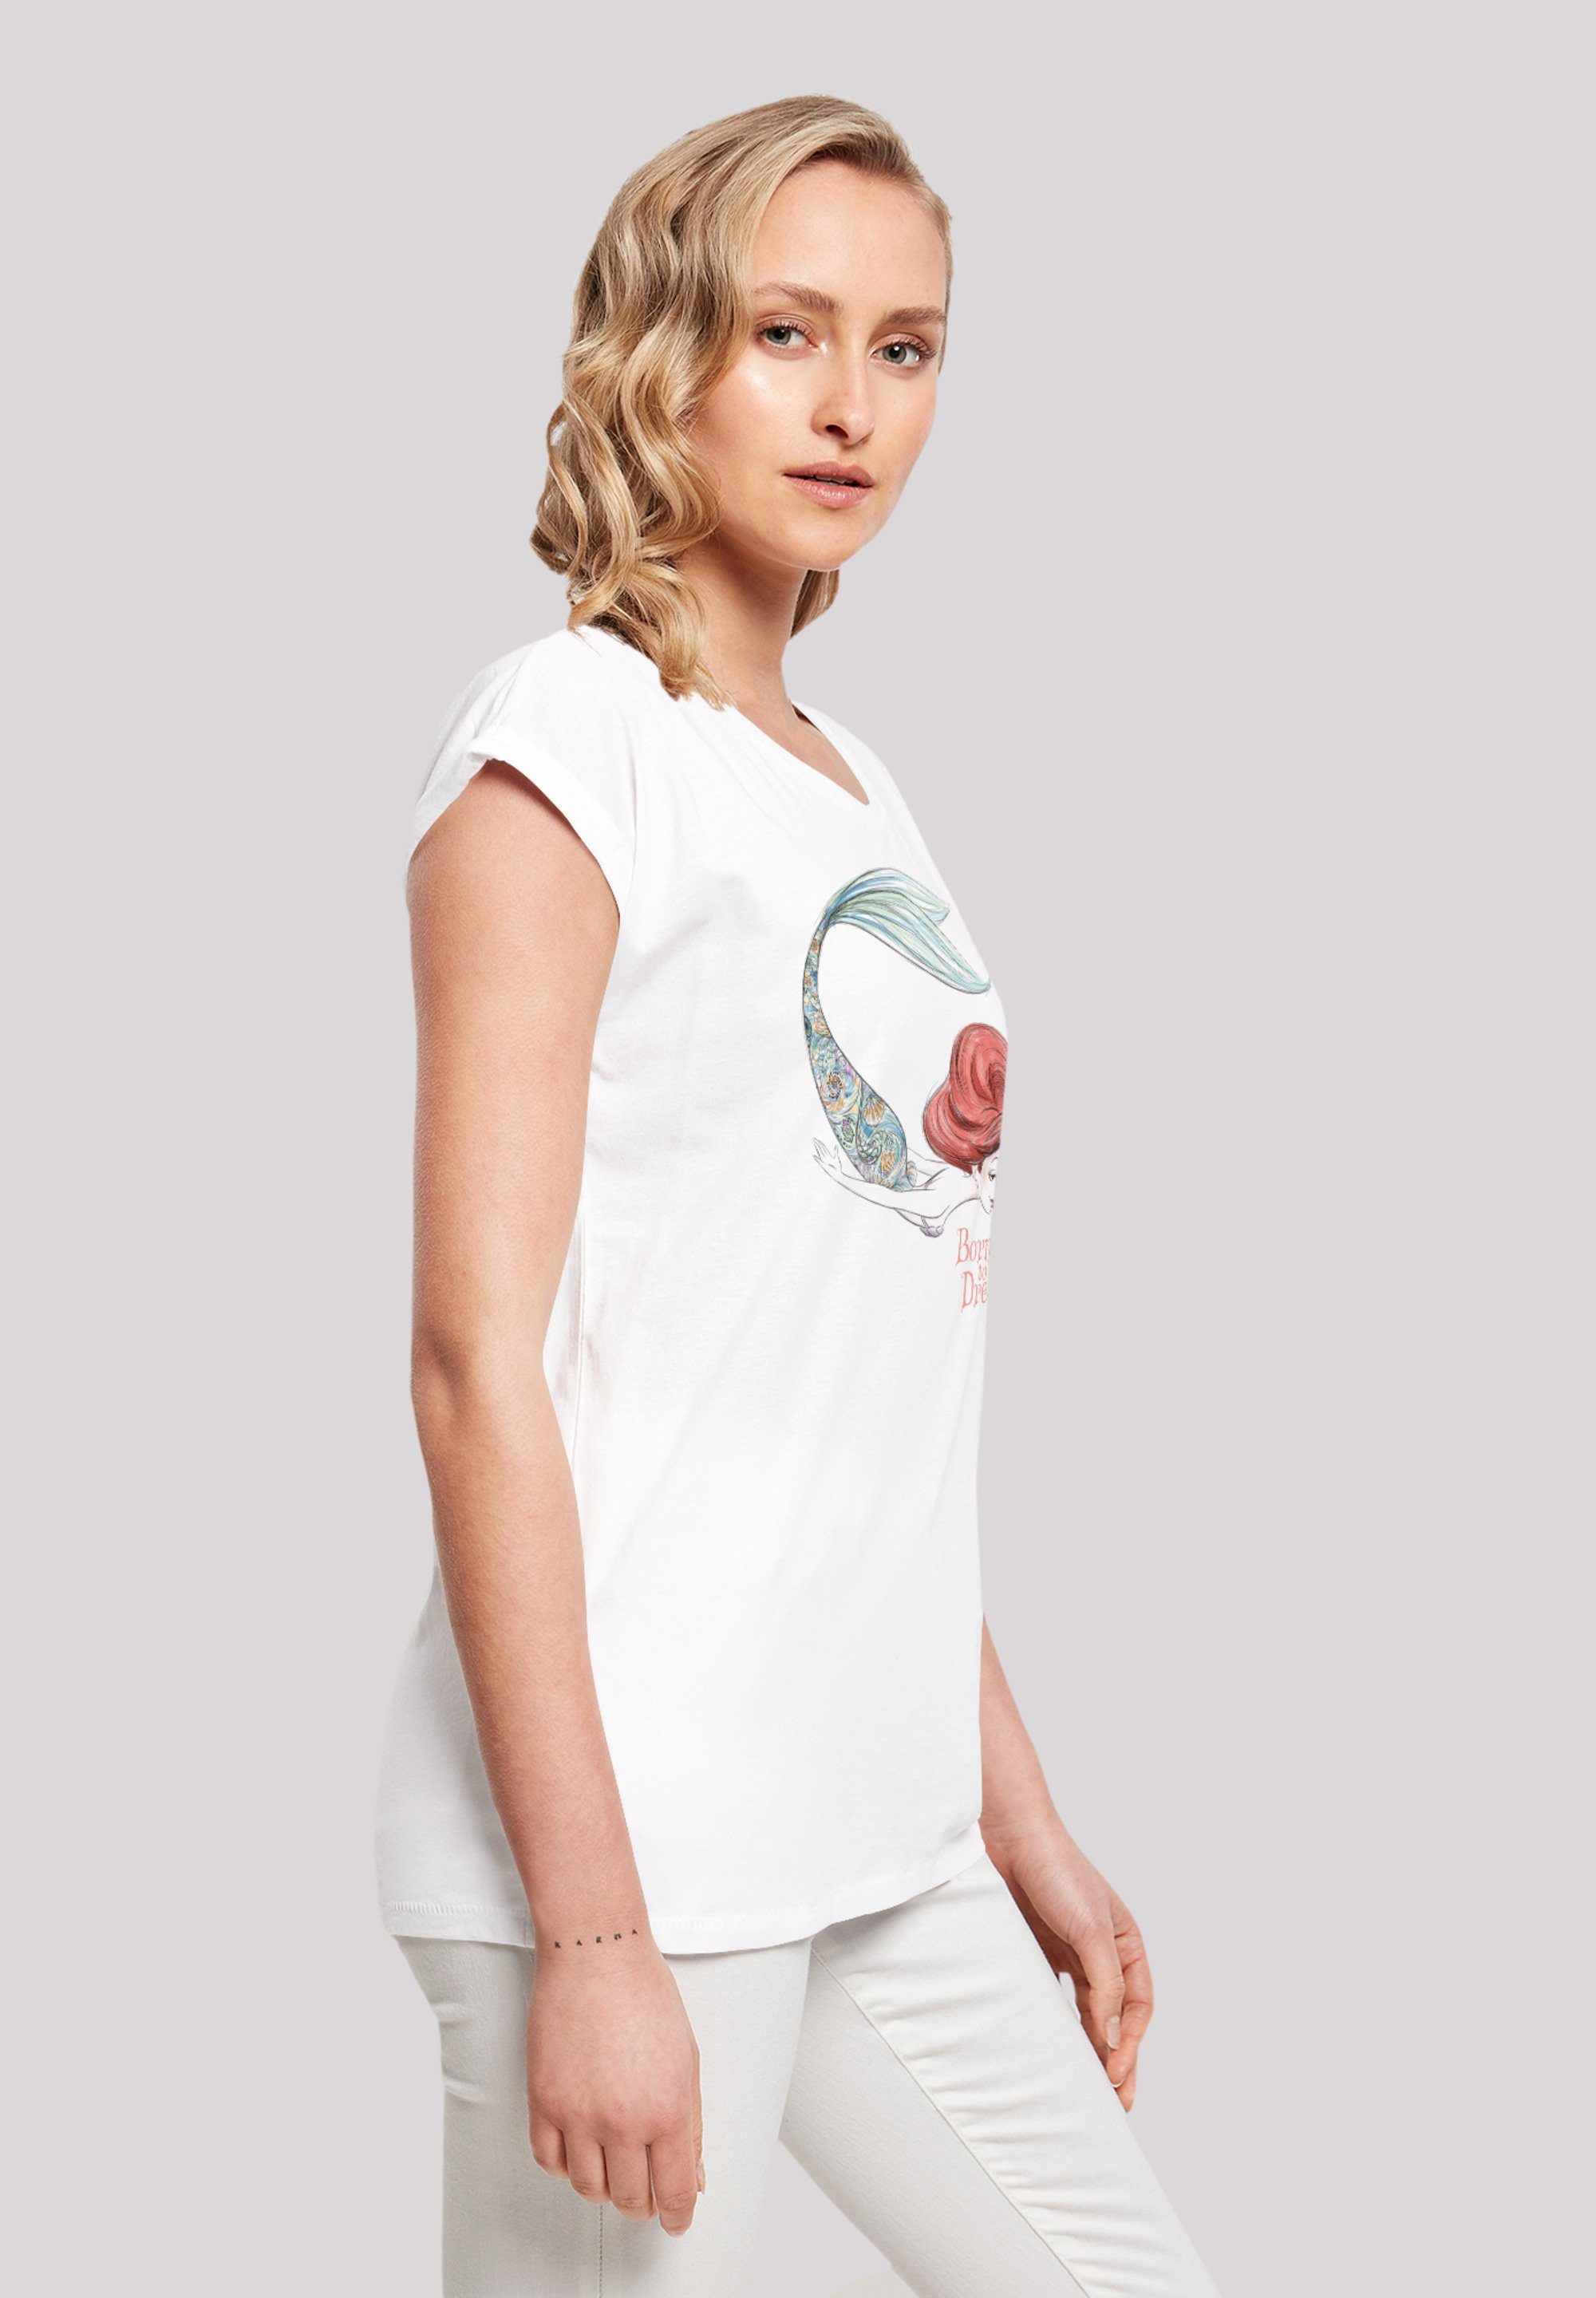 Disney T-Shirt Premium To F4NT4STIC Qualität Arielle Born Dream